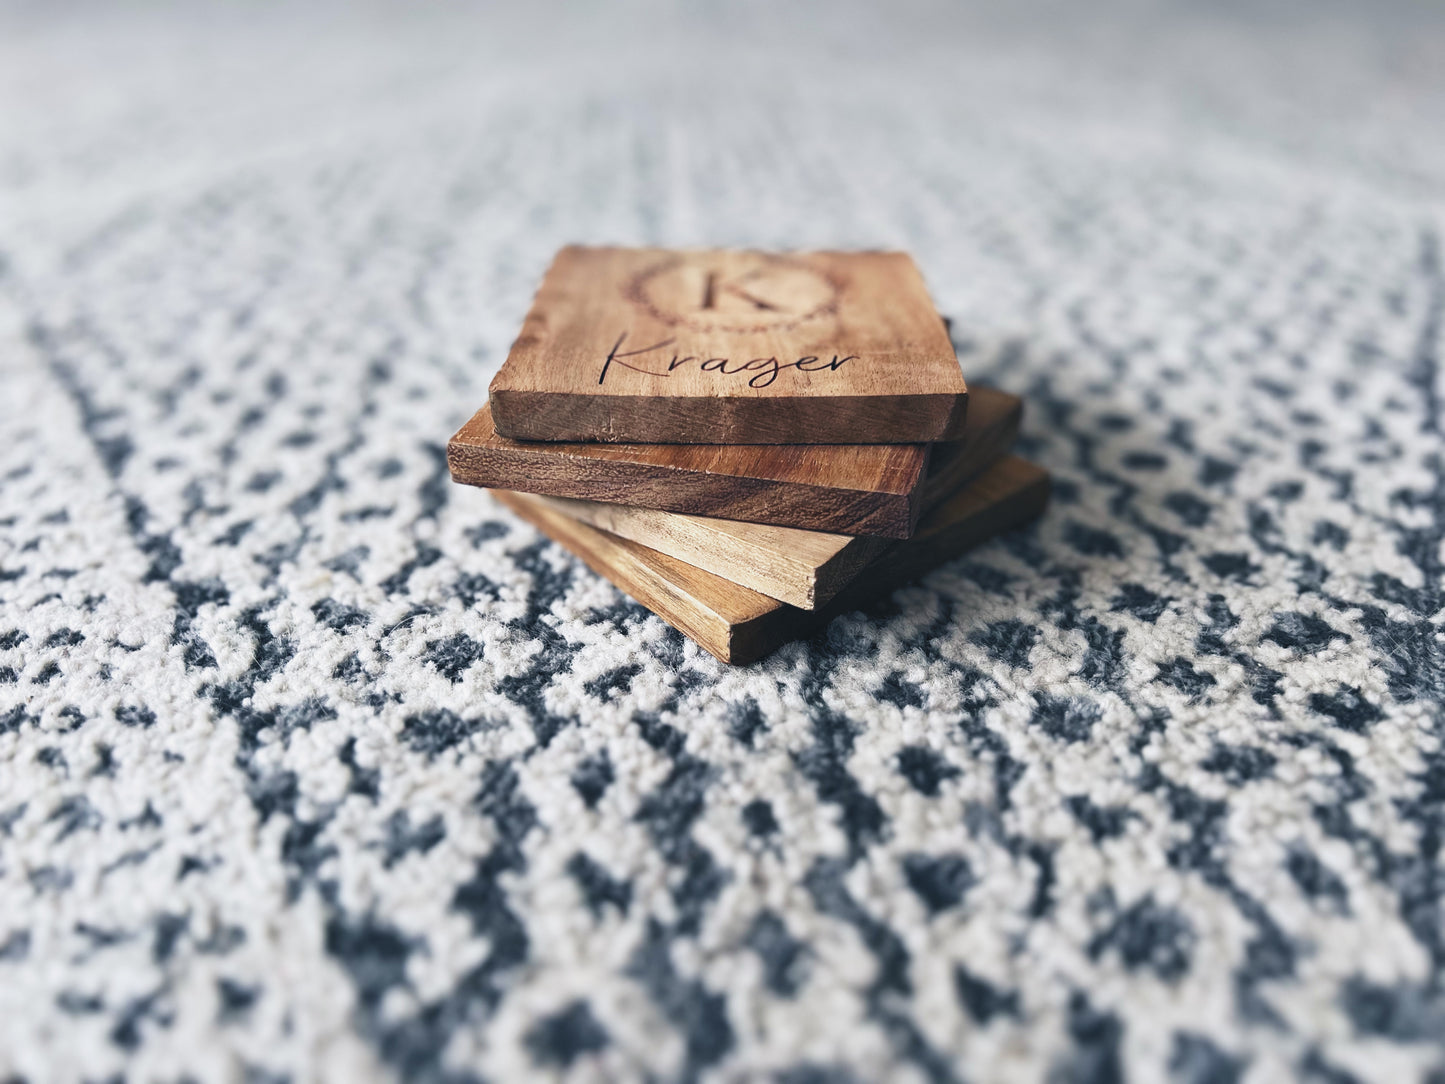 Personalized Custom Engraved Wood Coasters (set of 4)